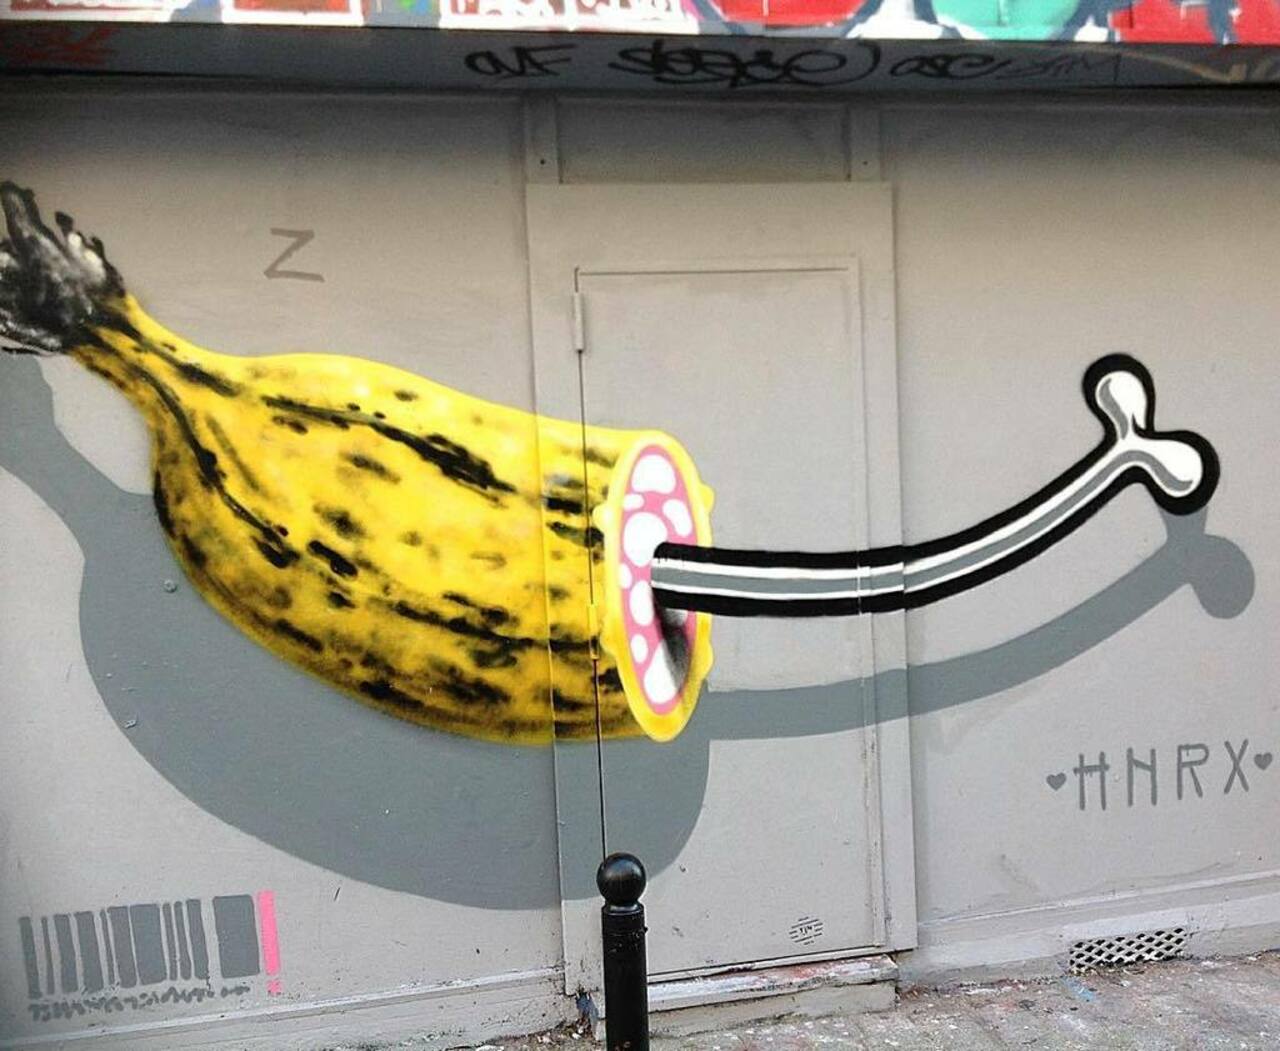 RT @StArtEverywhere: Ta la banane ce matin @_hnrx_ #hnrx #street #streetart #streetartparis #graff #graffiti #wallart #sprayart #urban #… http://t.co/PPySbFhJIR